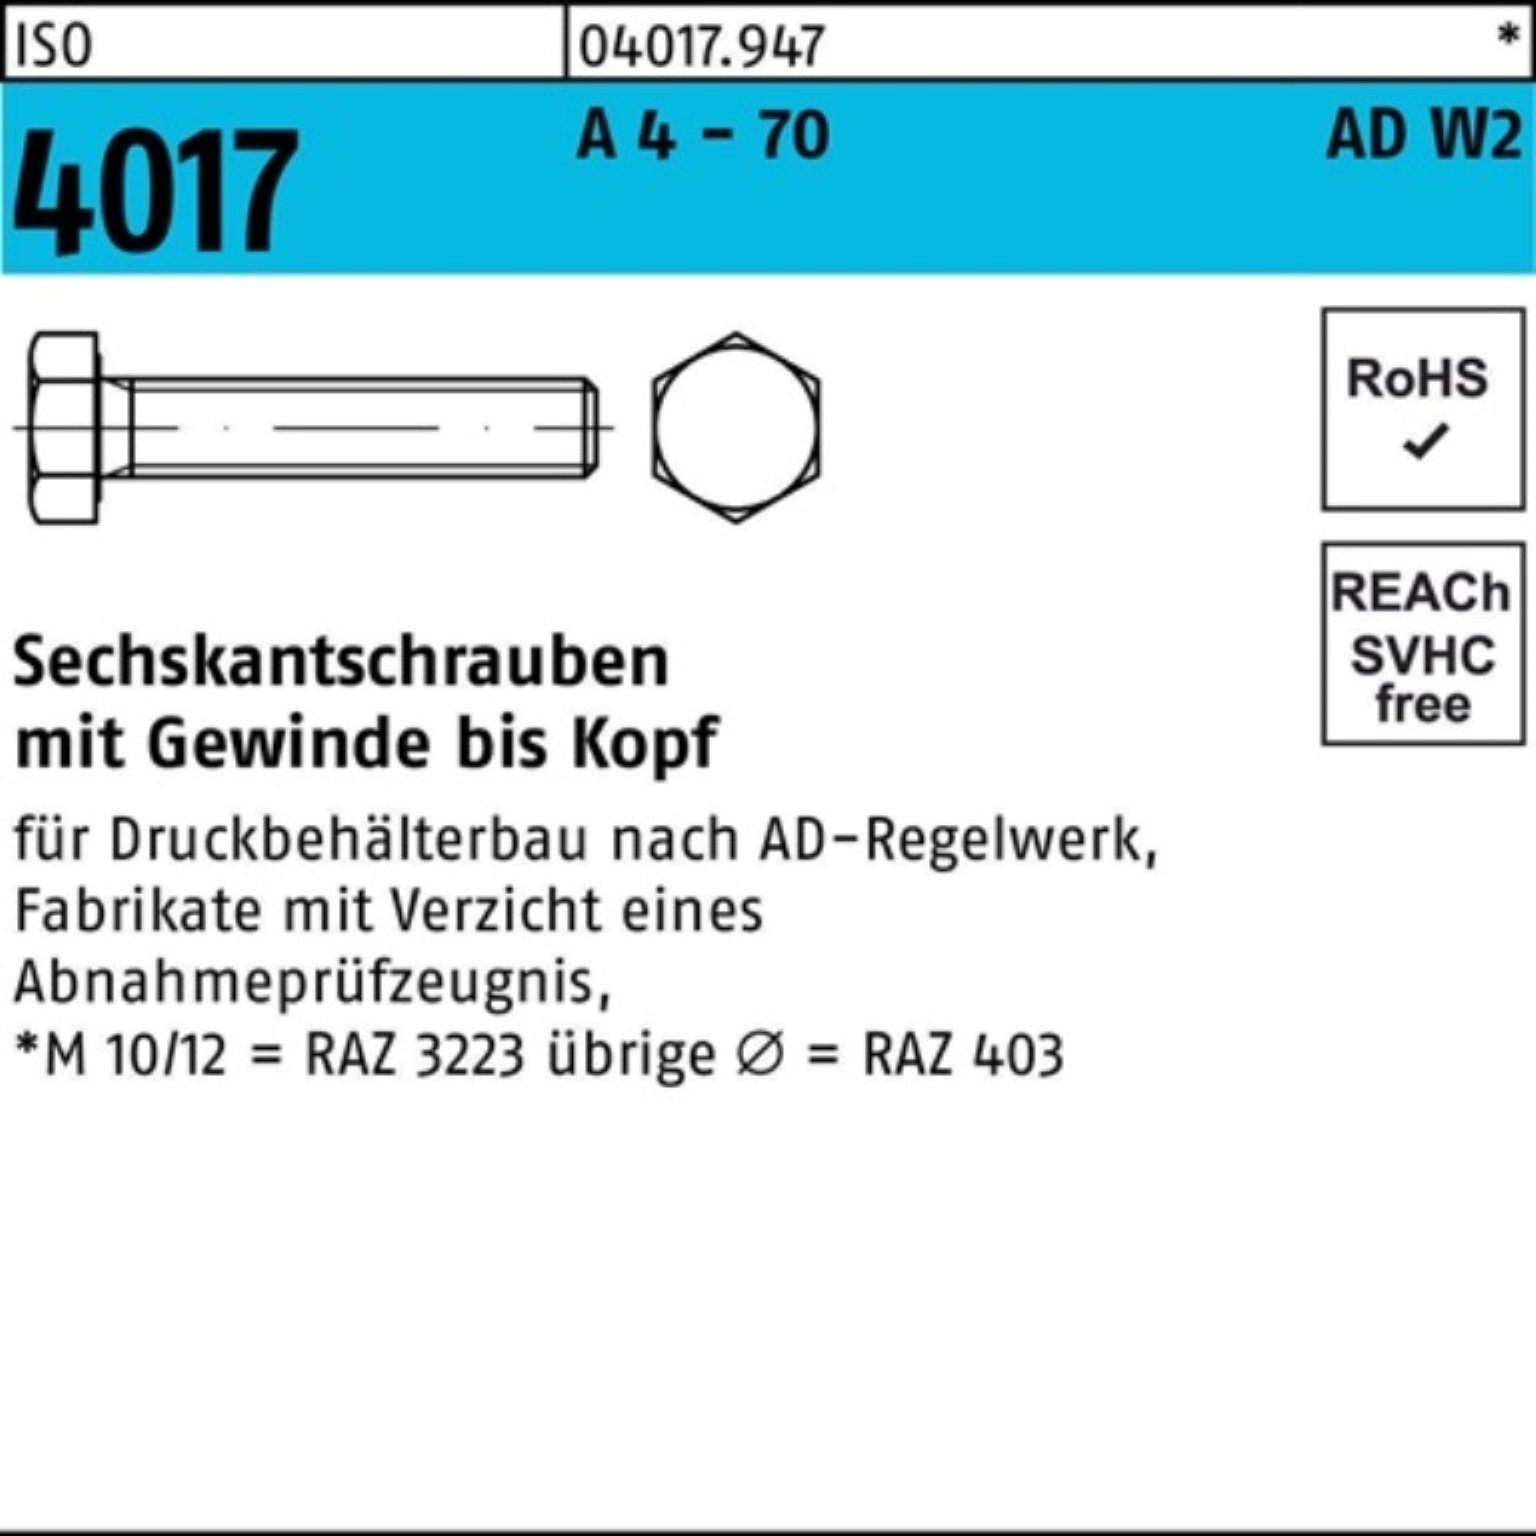 Bufab Sechskantschraube 100er Pack 4 70 VG M16x 80 - 25 4017 ISO St Sechskantschraube AD-W2 A